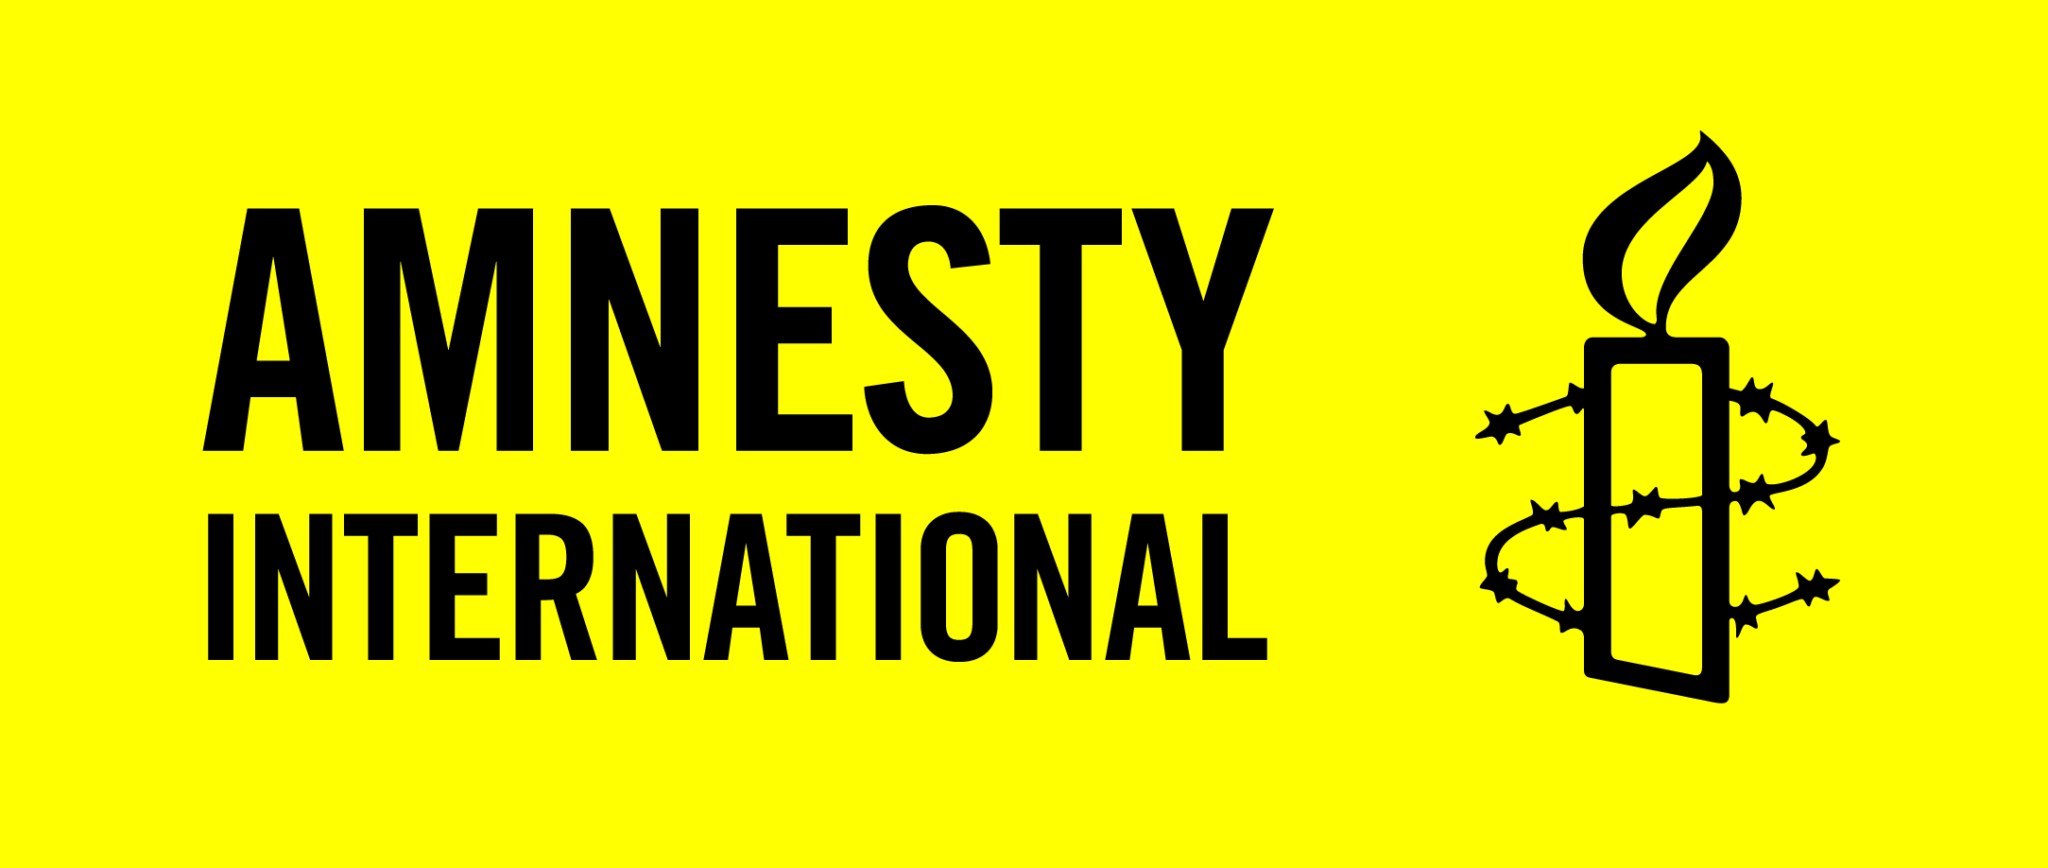 amnesty international logo with yellow background